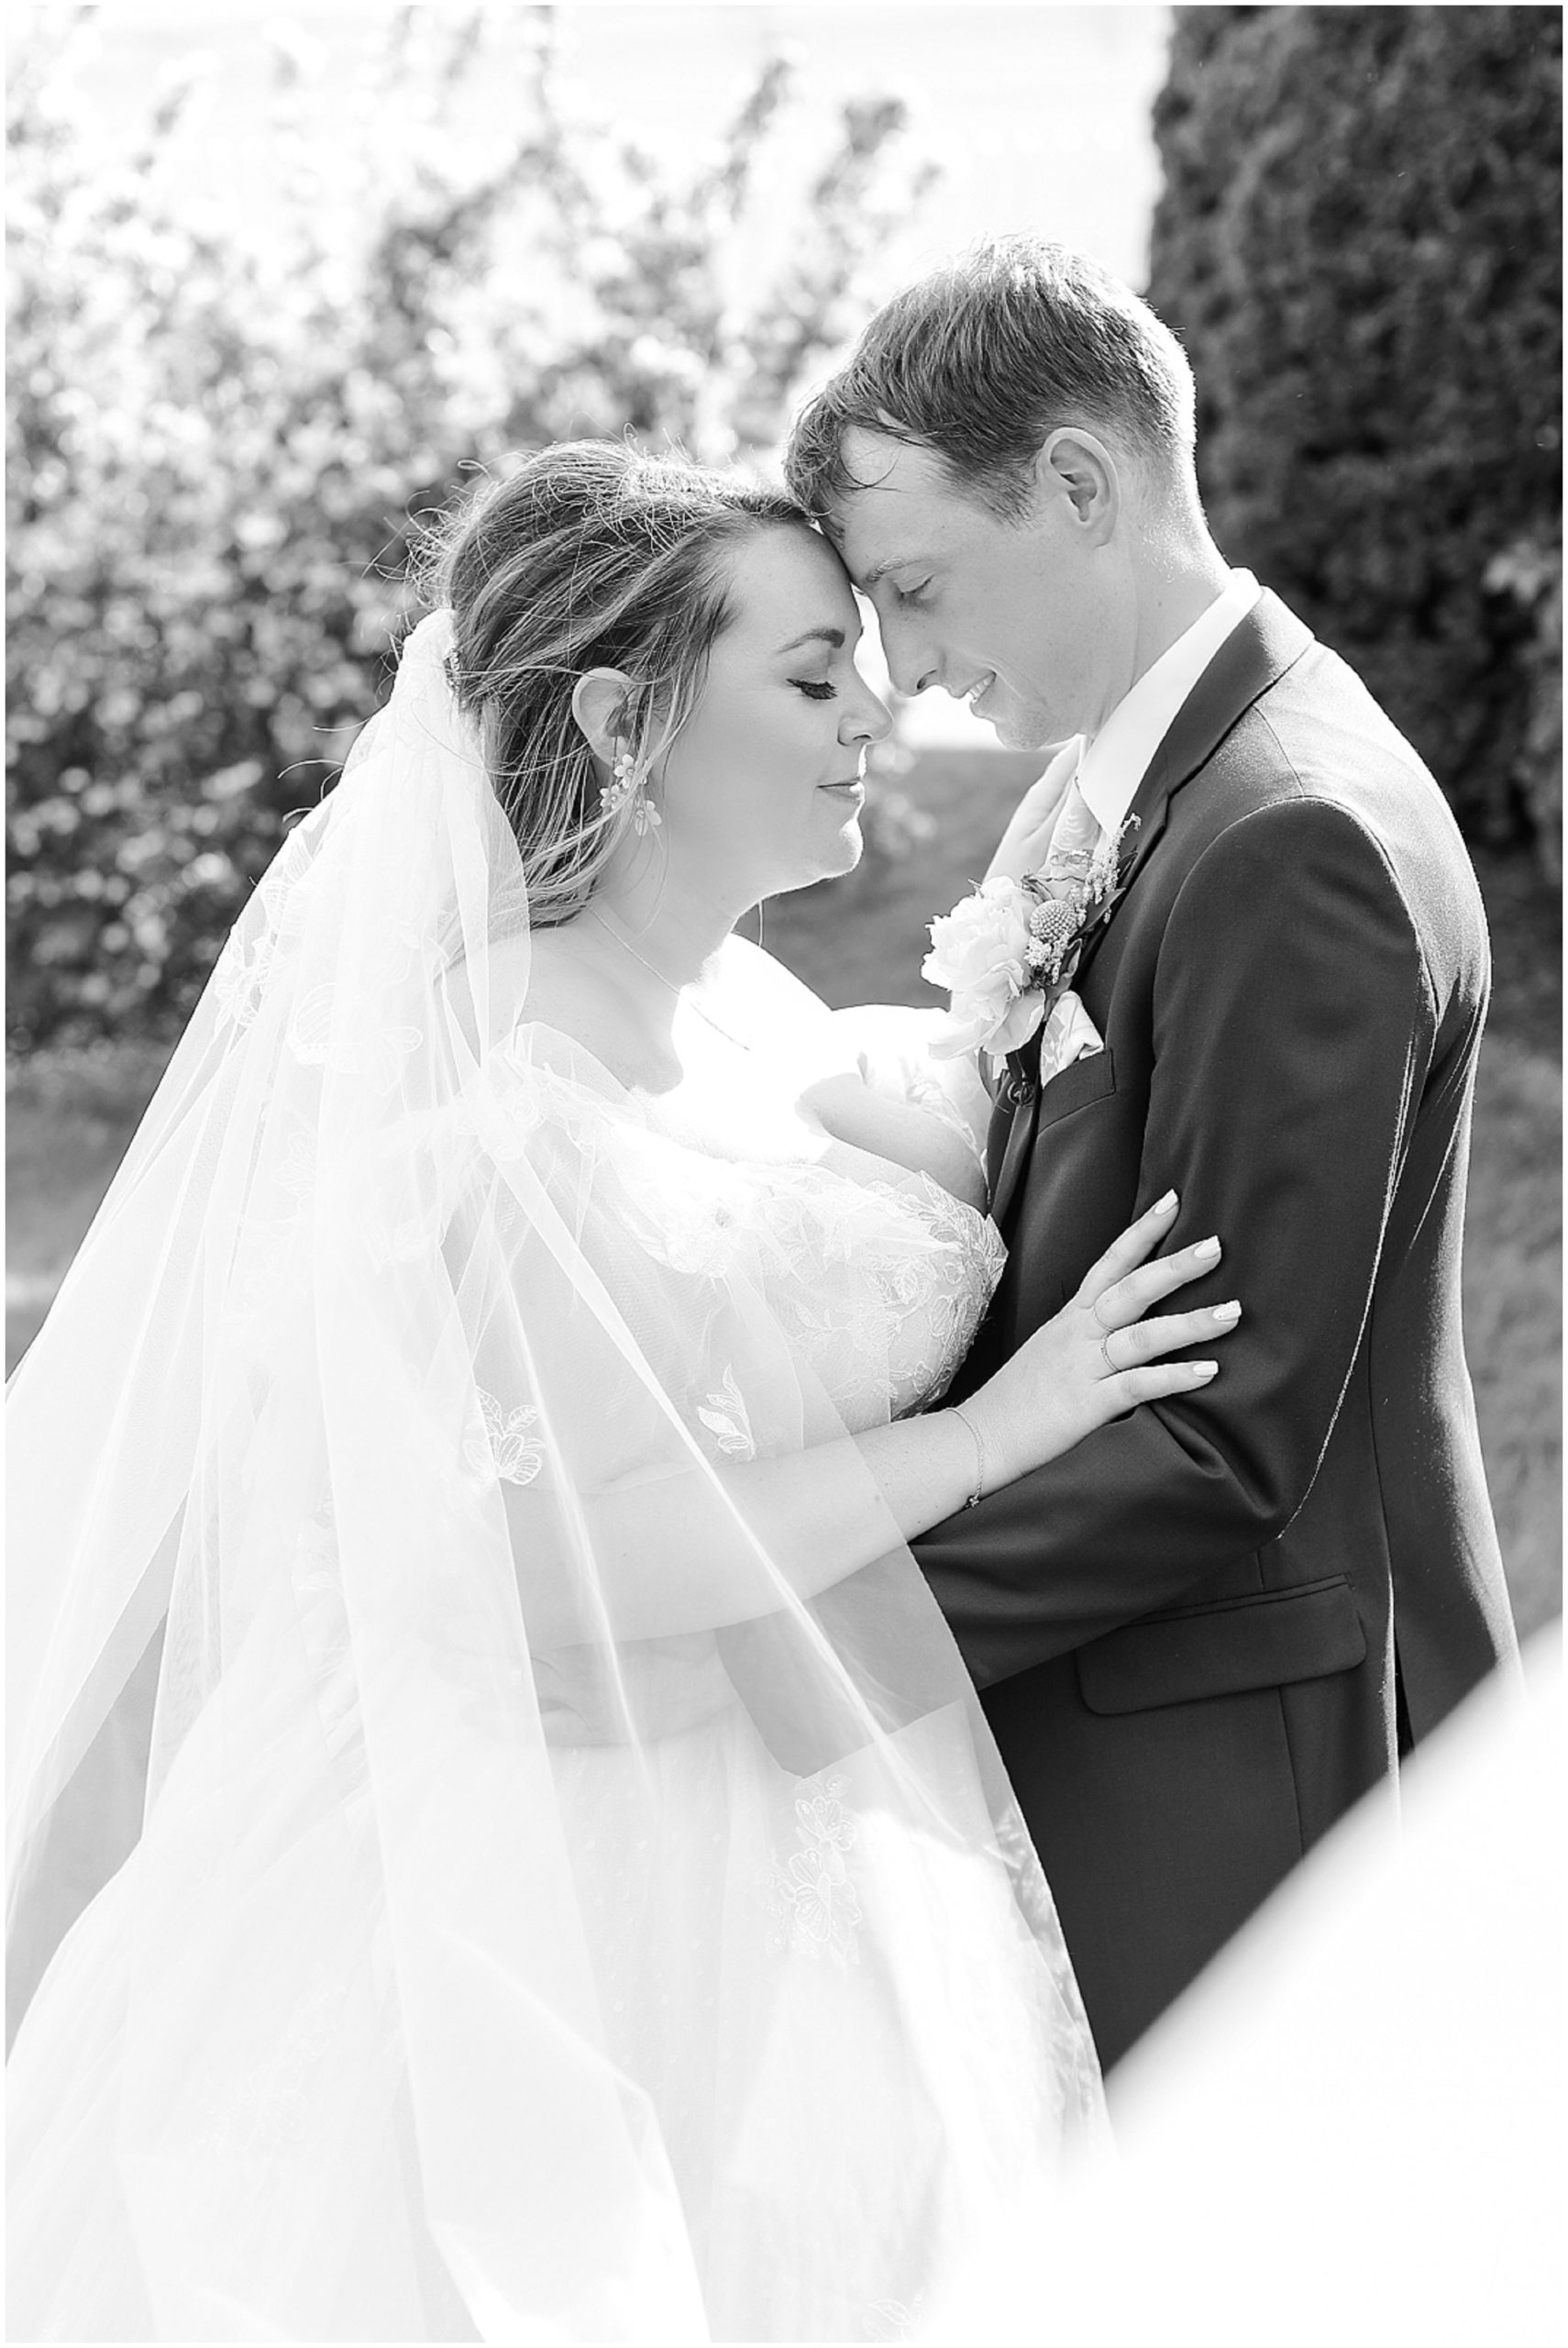 Colorful and Joyful Wedding Photography - Kansas City Wedding Photographer - The Rhapsody - bride and groom wedding portraits 